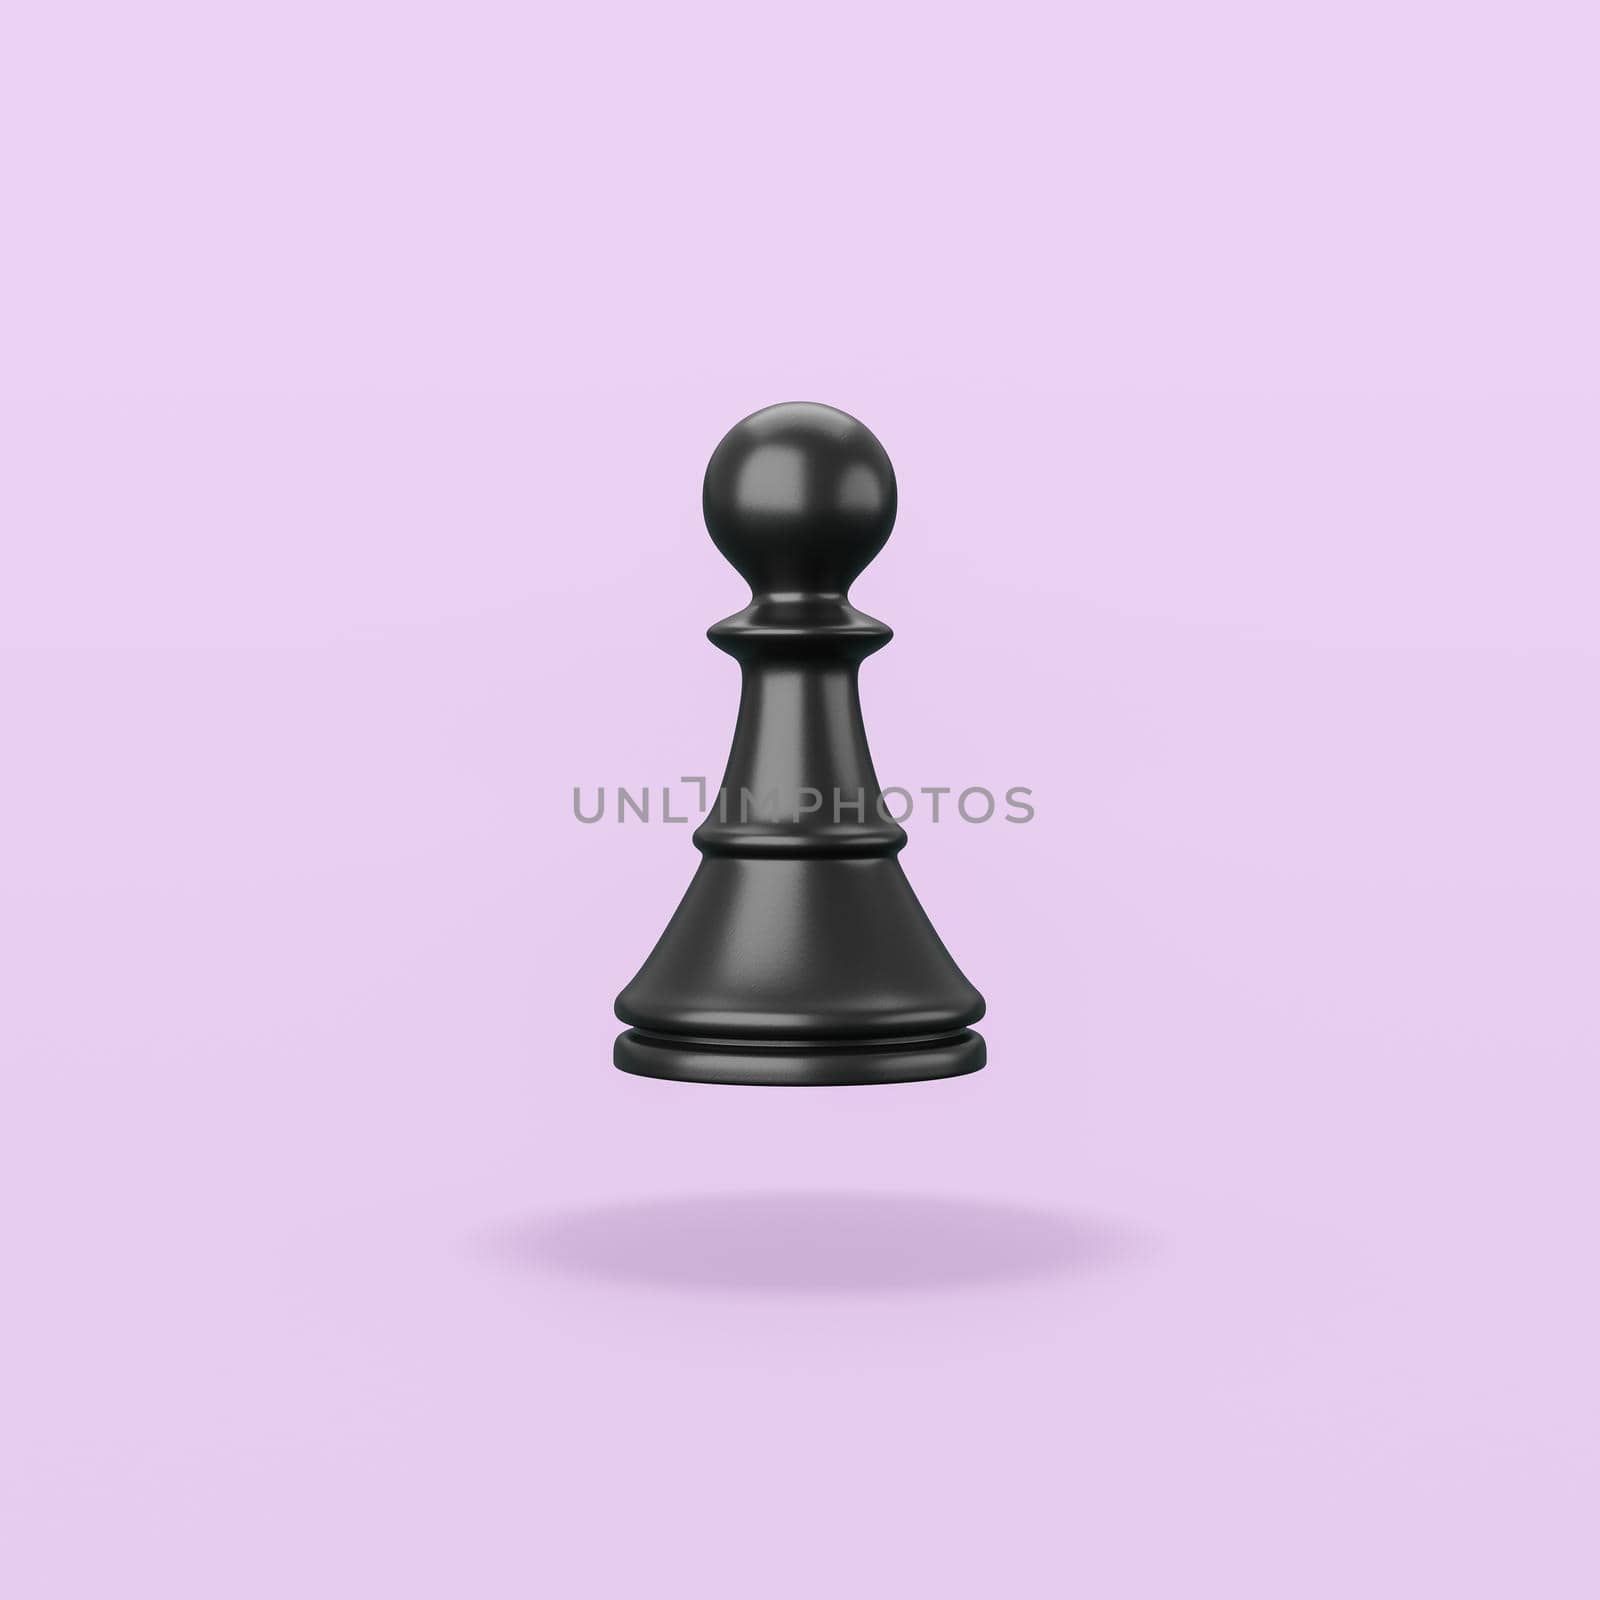 Black Wooden Chessman on Purple Background by make